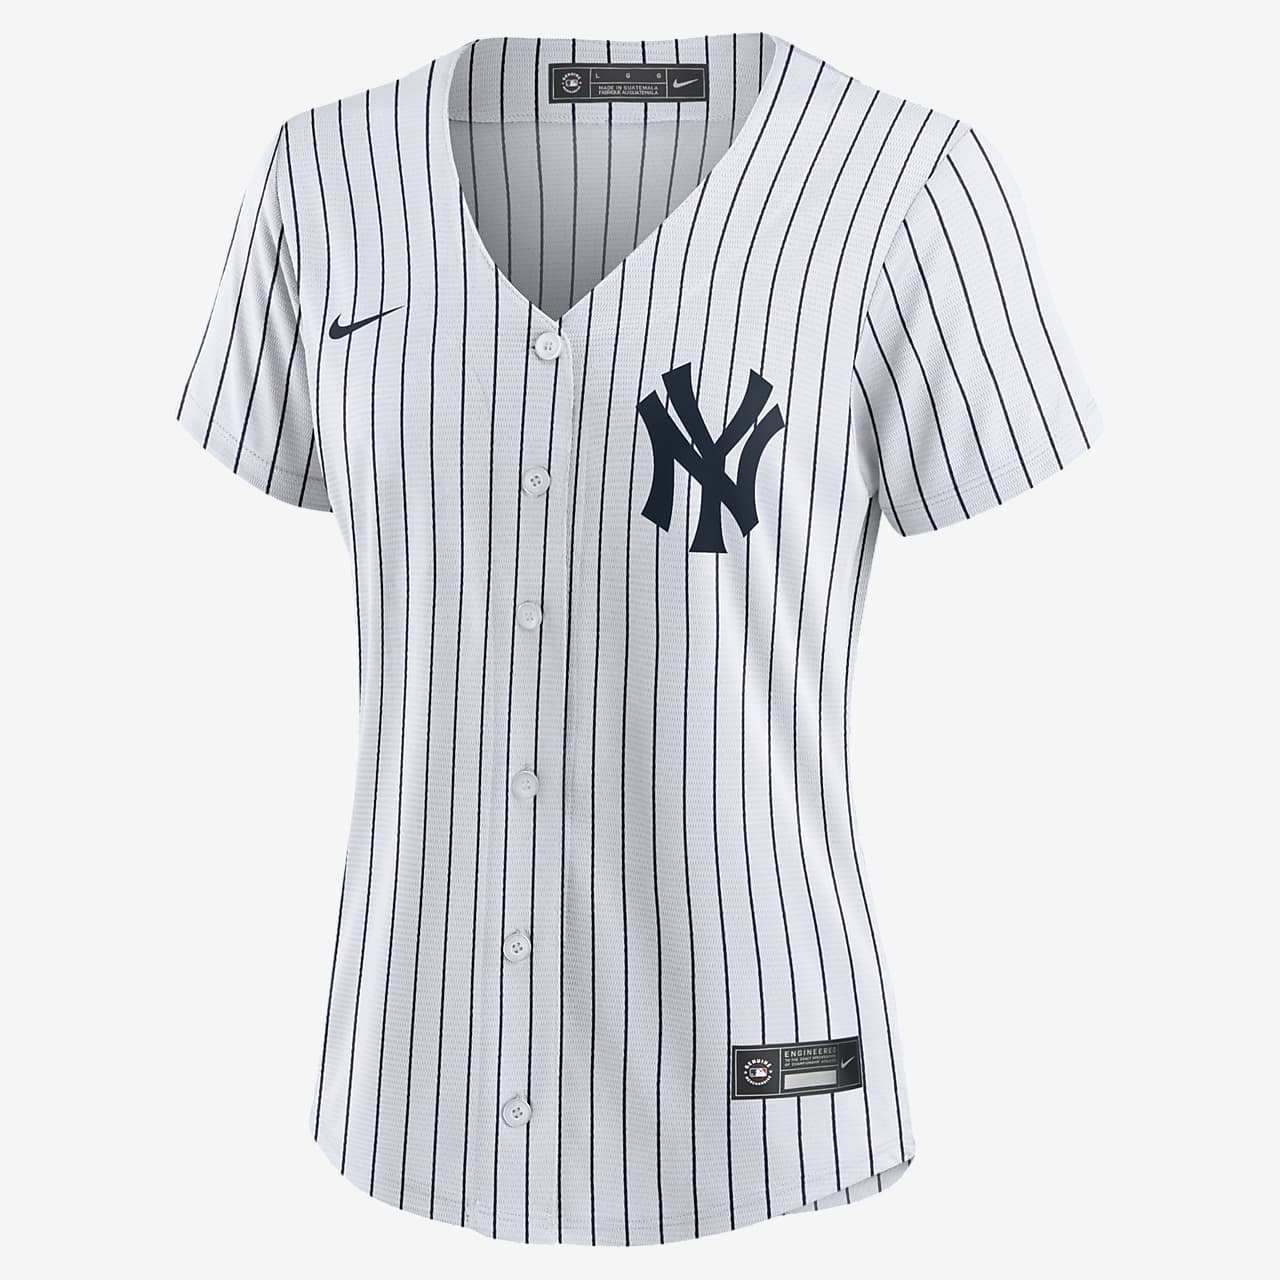 MLB New York Yankees 2020 Hall of Fame Induction (Derek Jeter) Women's Replica Baseball Jersey